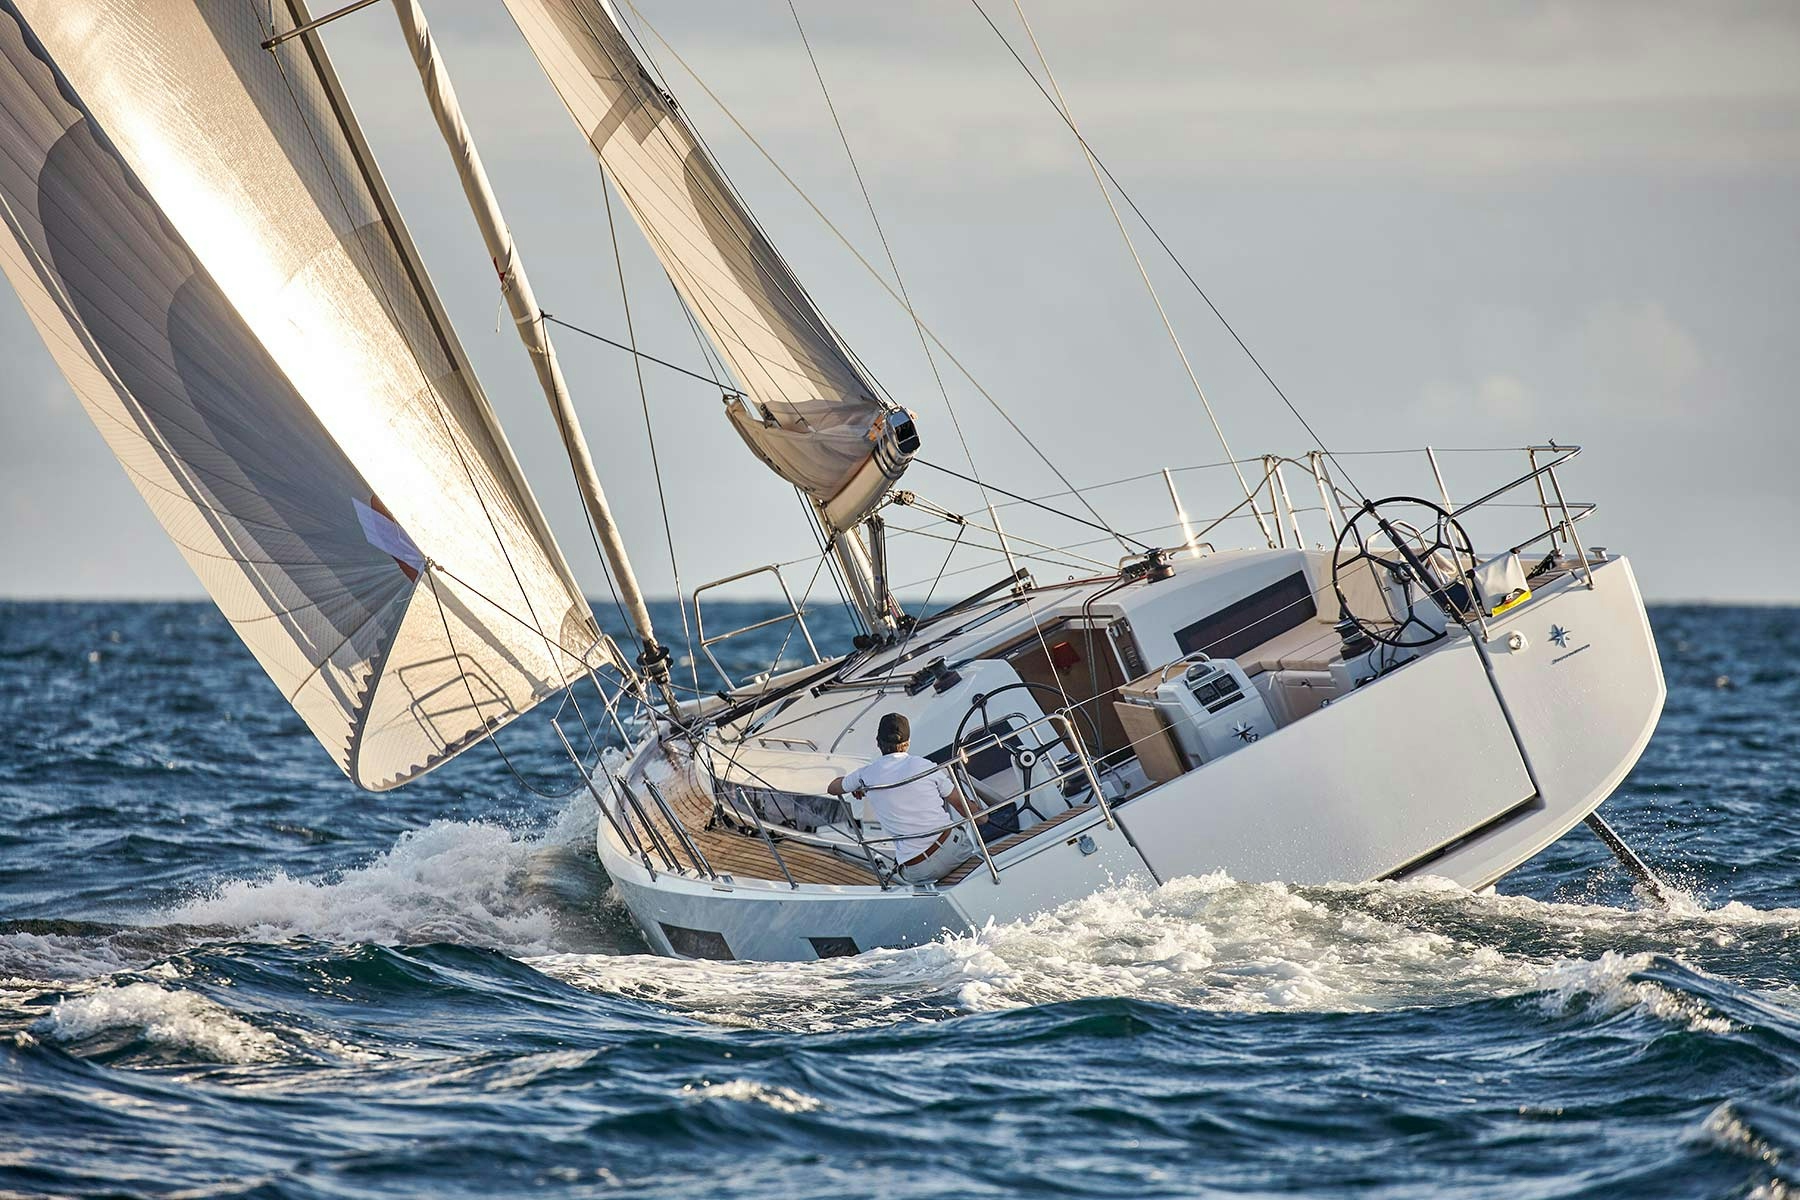 Jeanneau sailing yachts